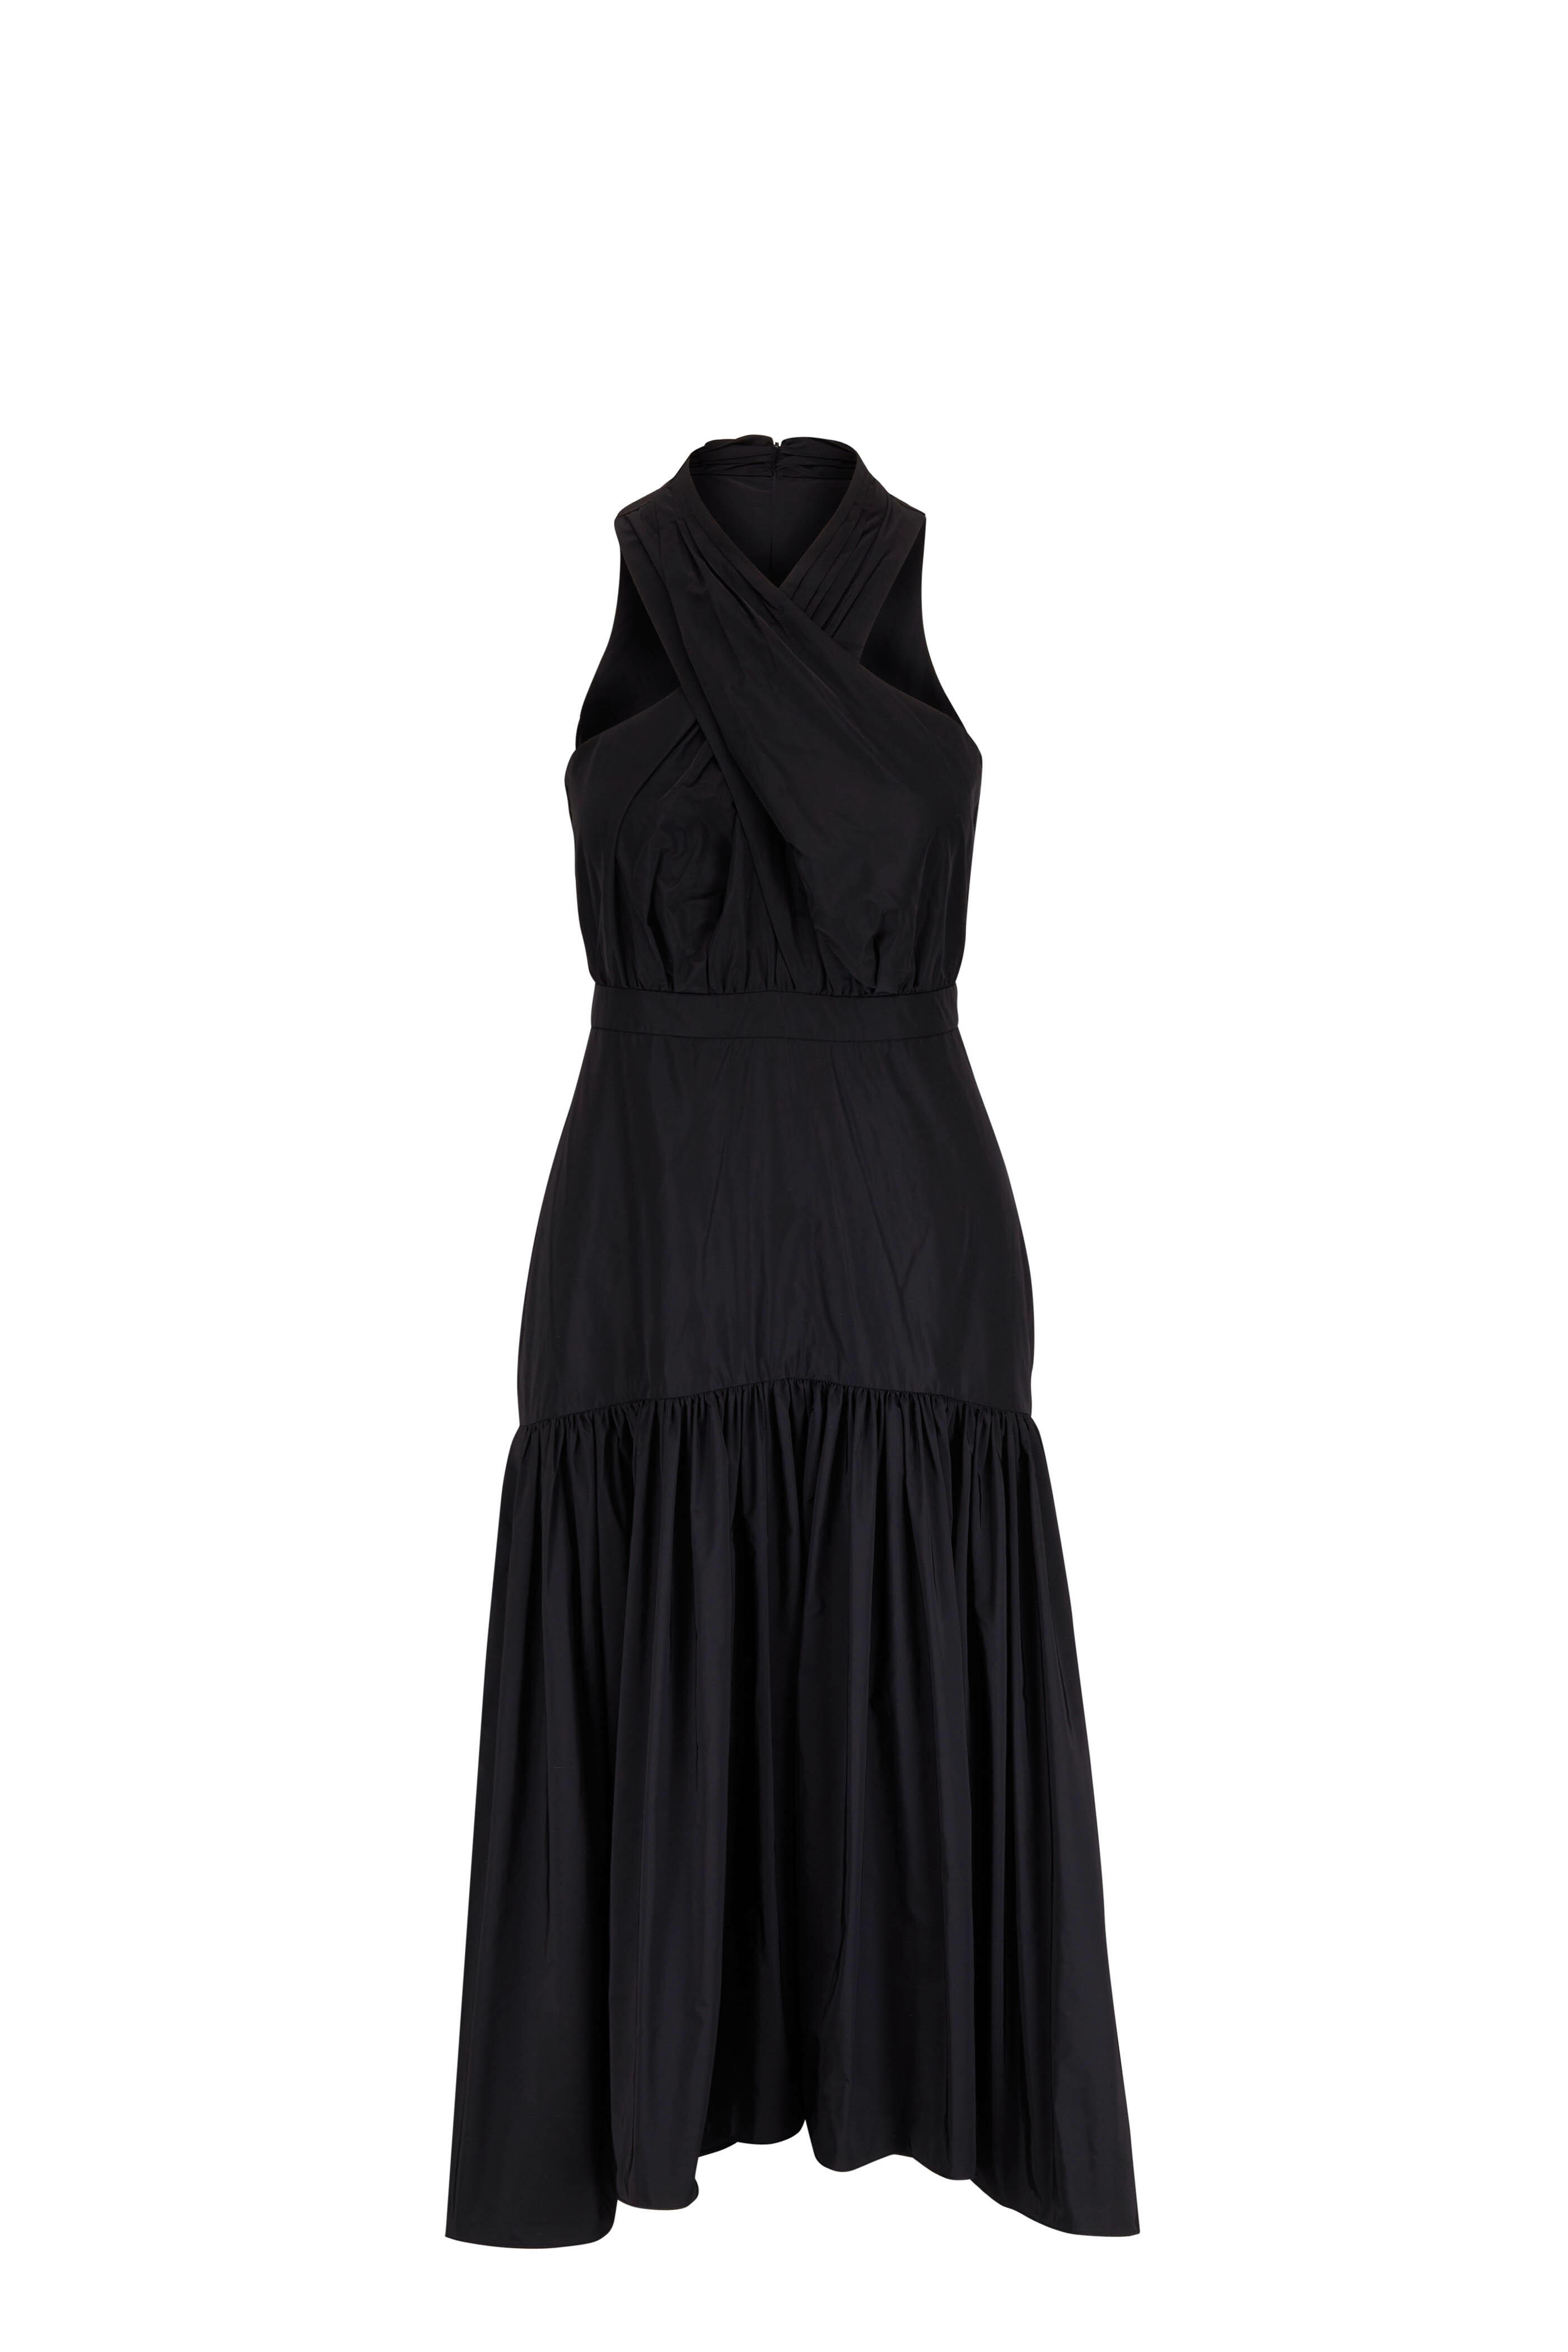 Veronica Beard - Radley Black Dress | Mitchell Stores